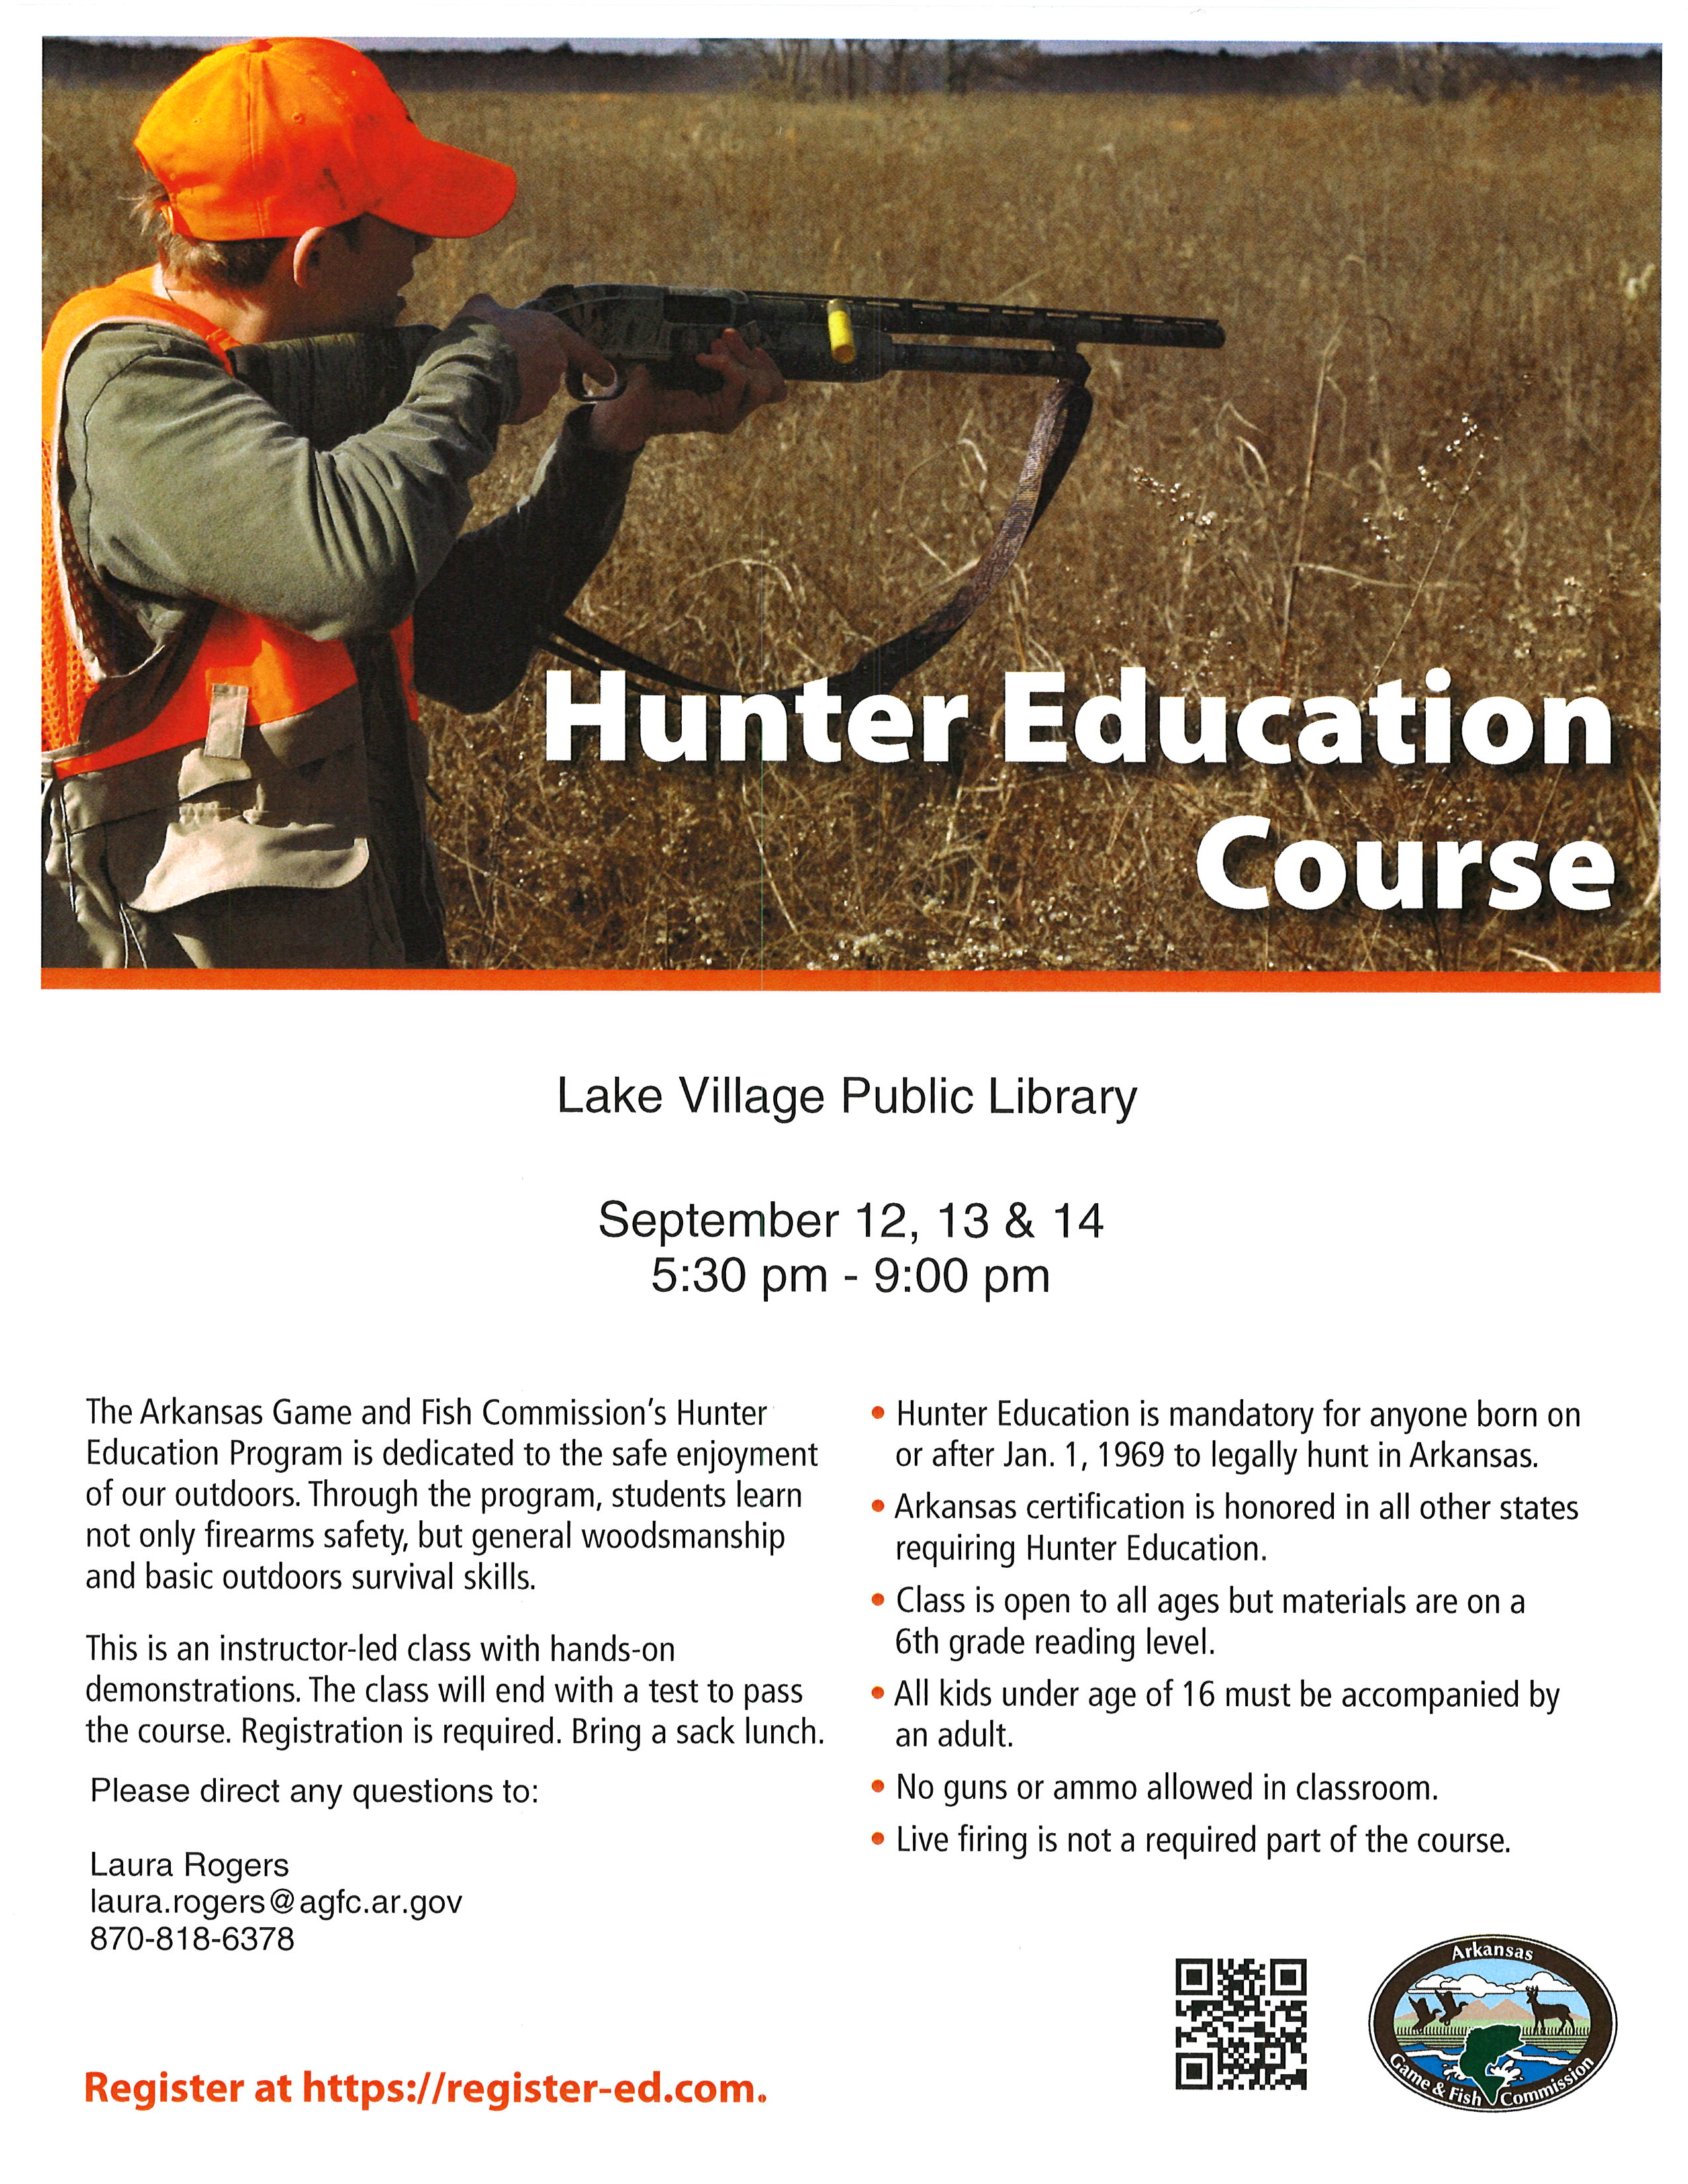 Hunter Education course